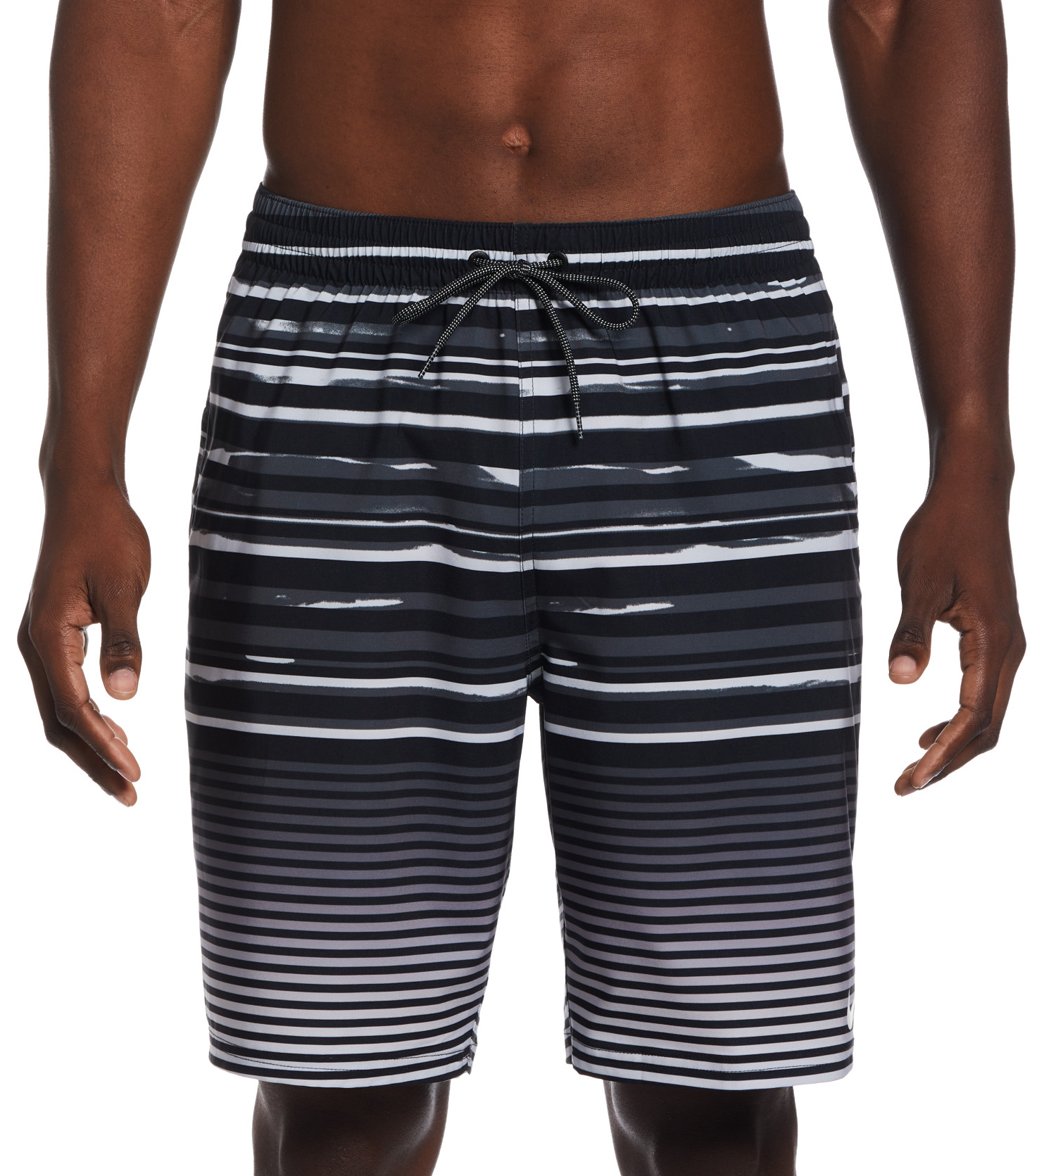 Nike Mens 20 Fade Stripe Breaker Swim Trunks